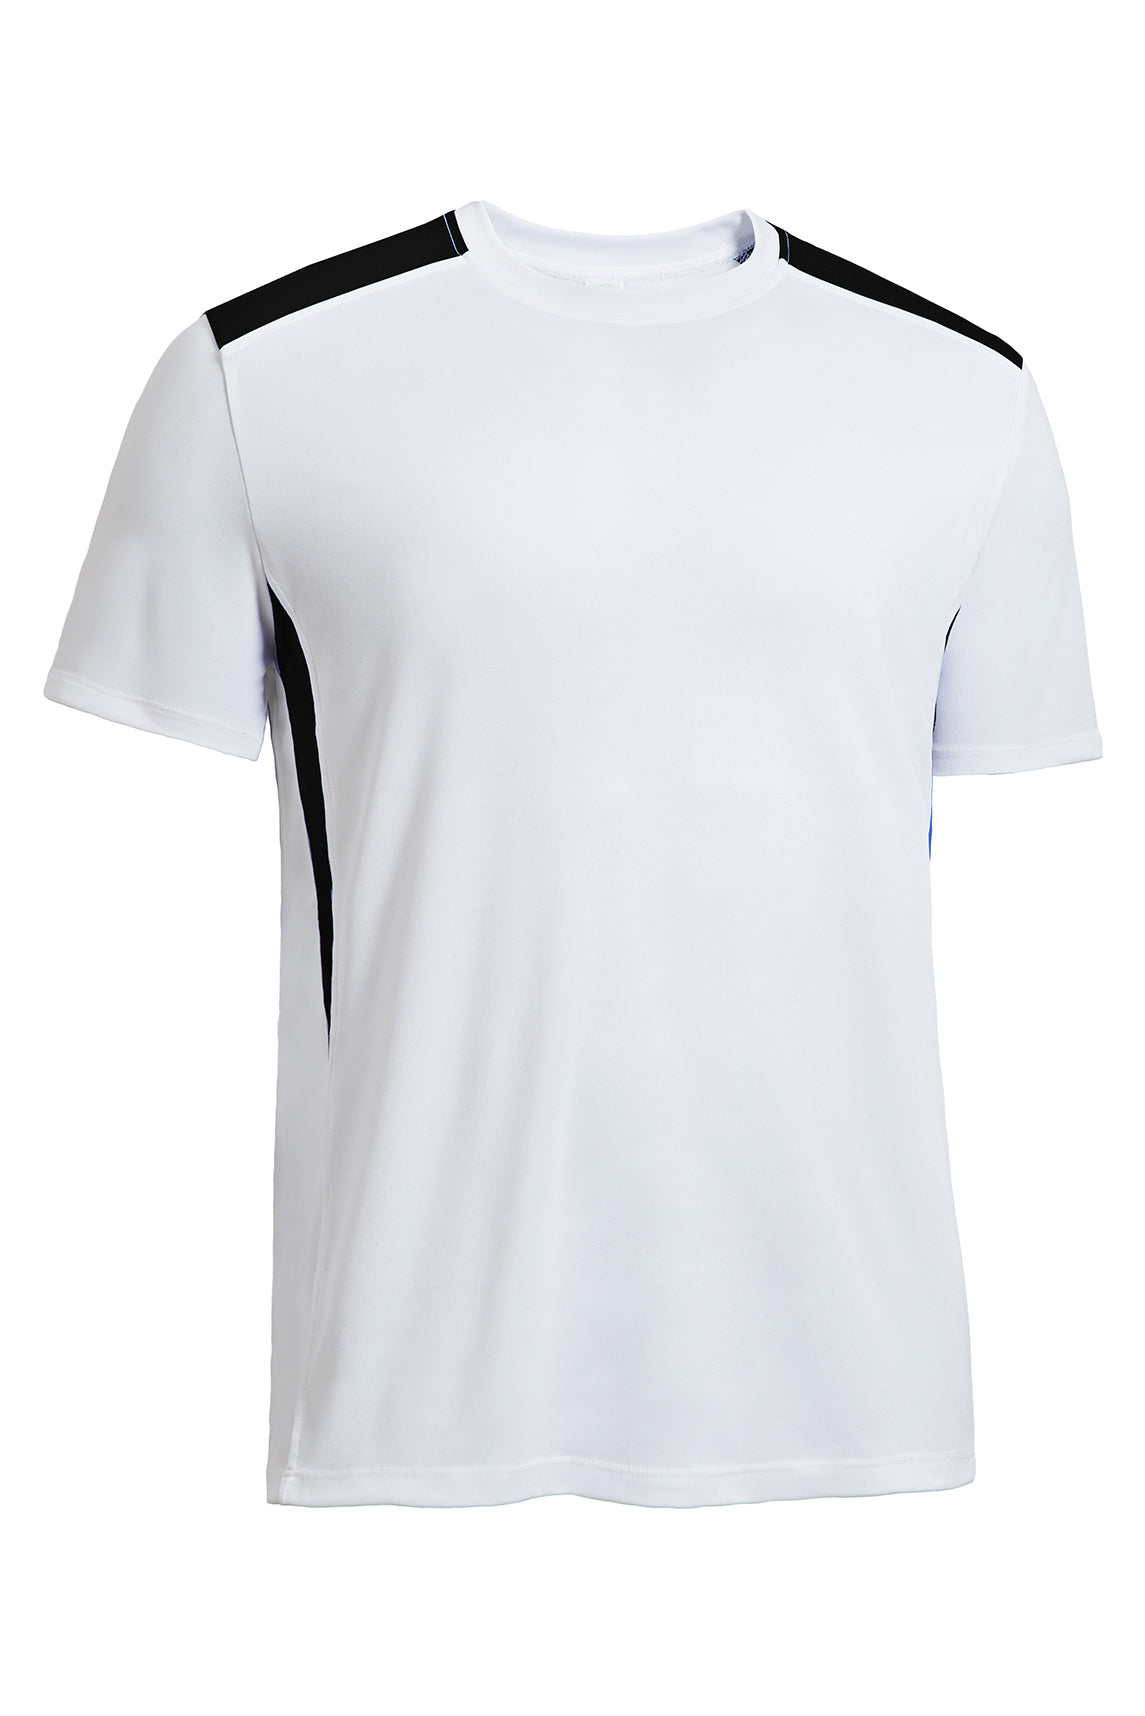 Expert Brand Retail Men's pk maX™ Tec Tee Stadium Tee in White Black#color_white-black